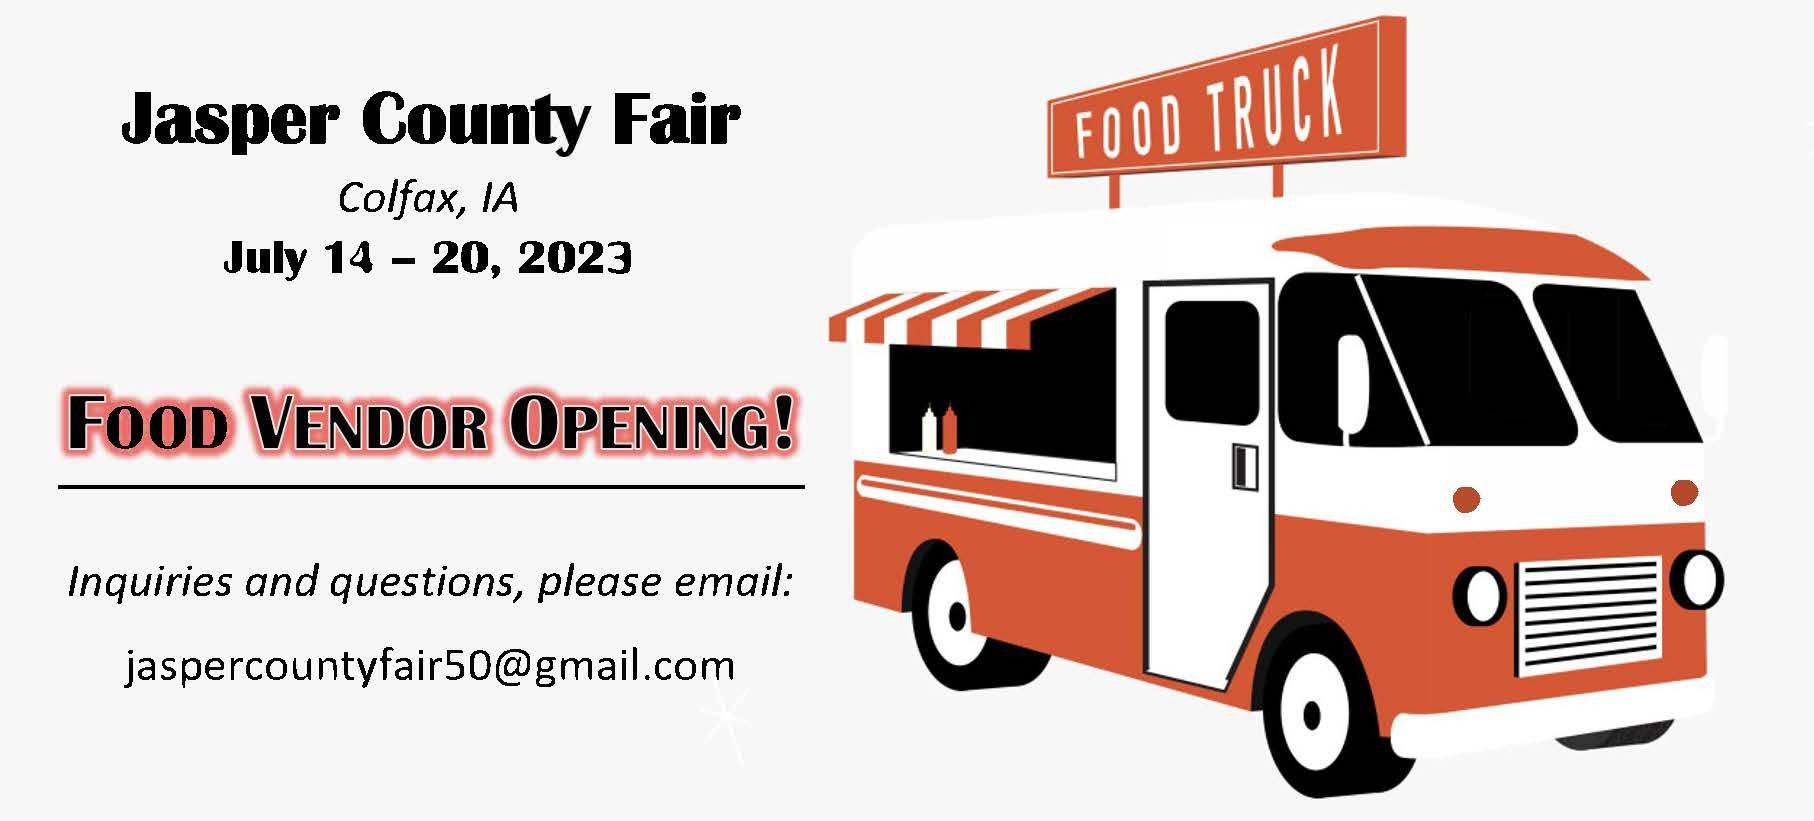 2023 Food Vendors Needed by Jasper County Fair